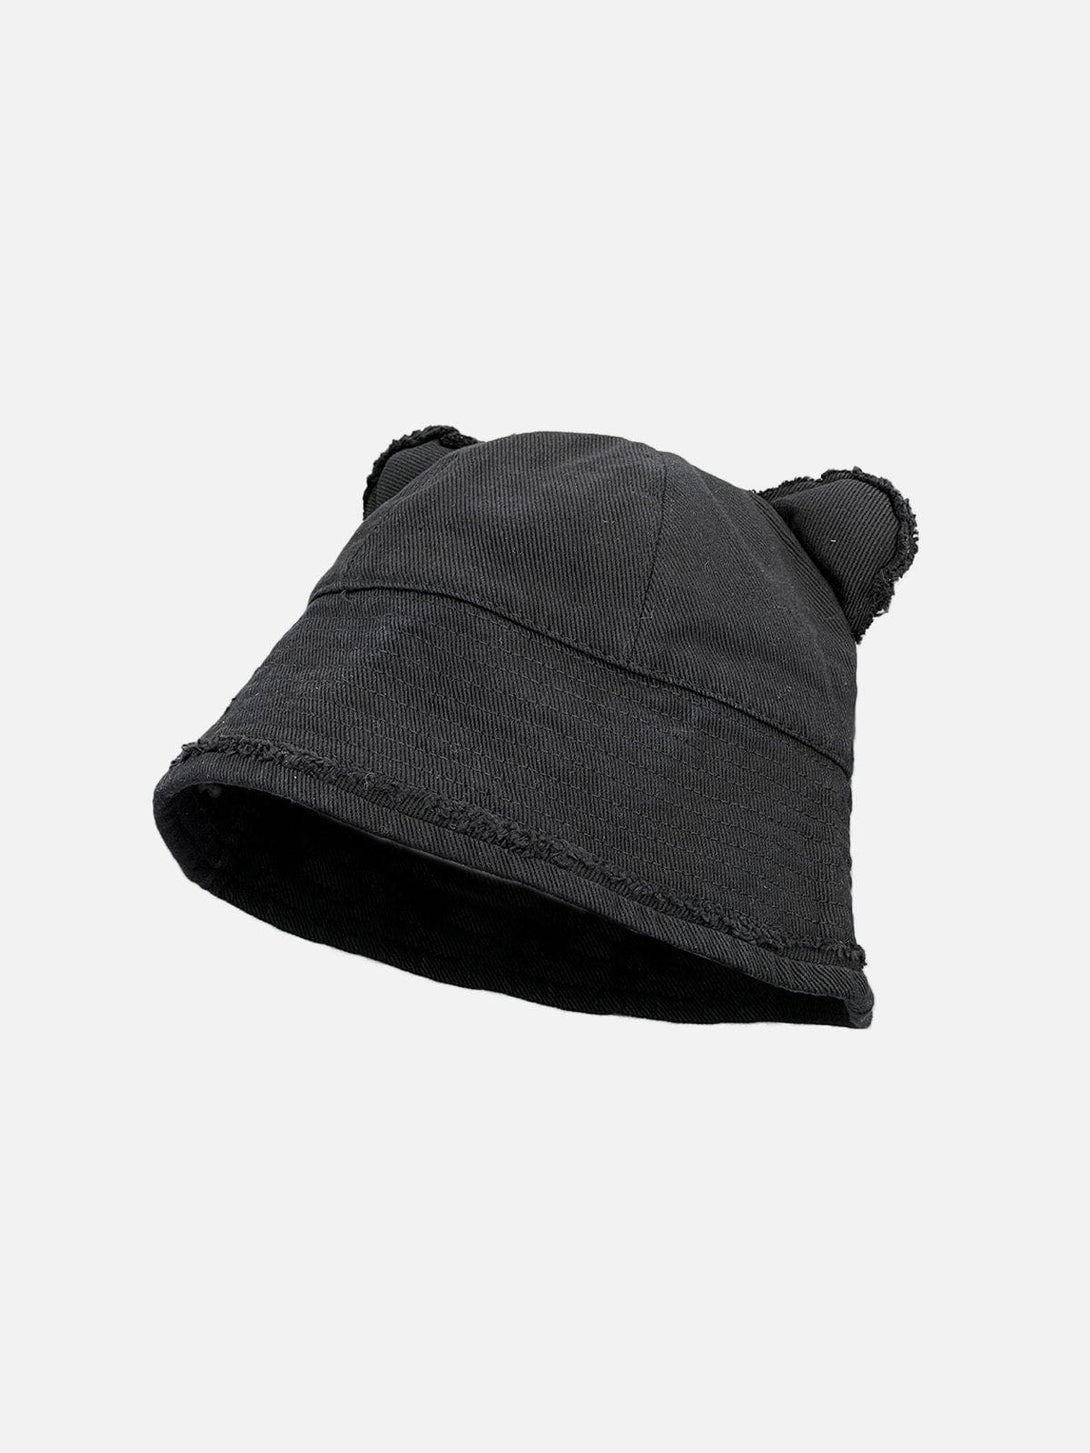 Majesda® - Solid Cute Bear Ears Hat- Outfit Ideas - Streetwear Fashion - majesda.com